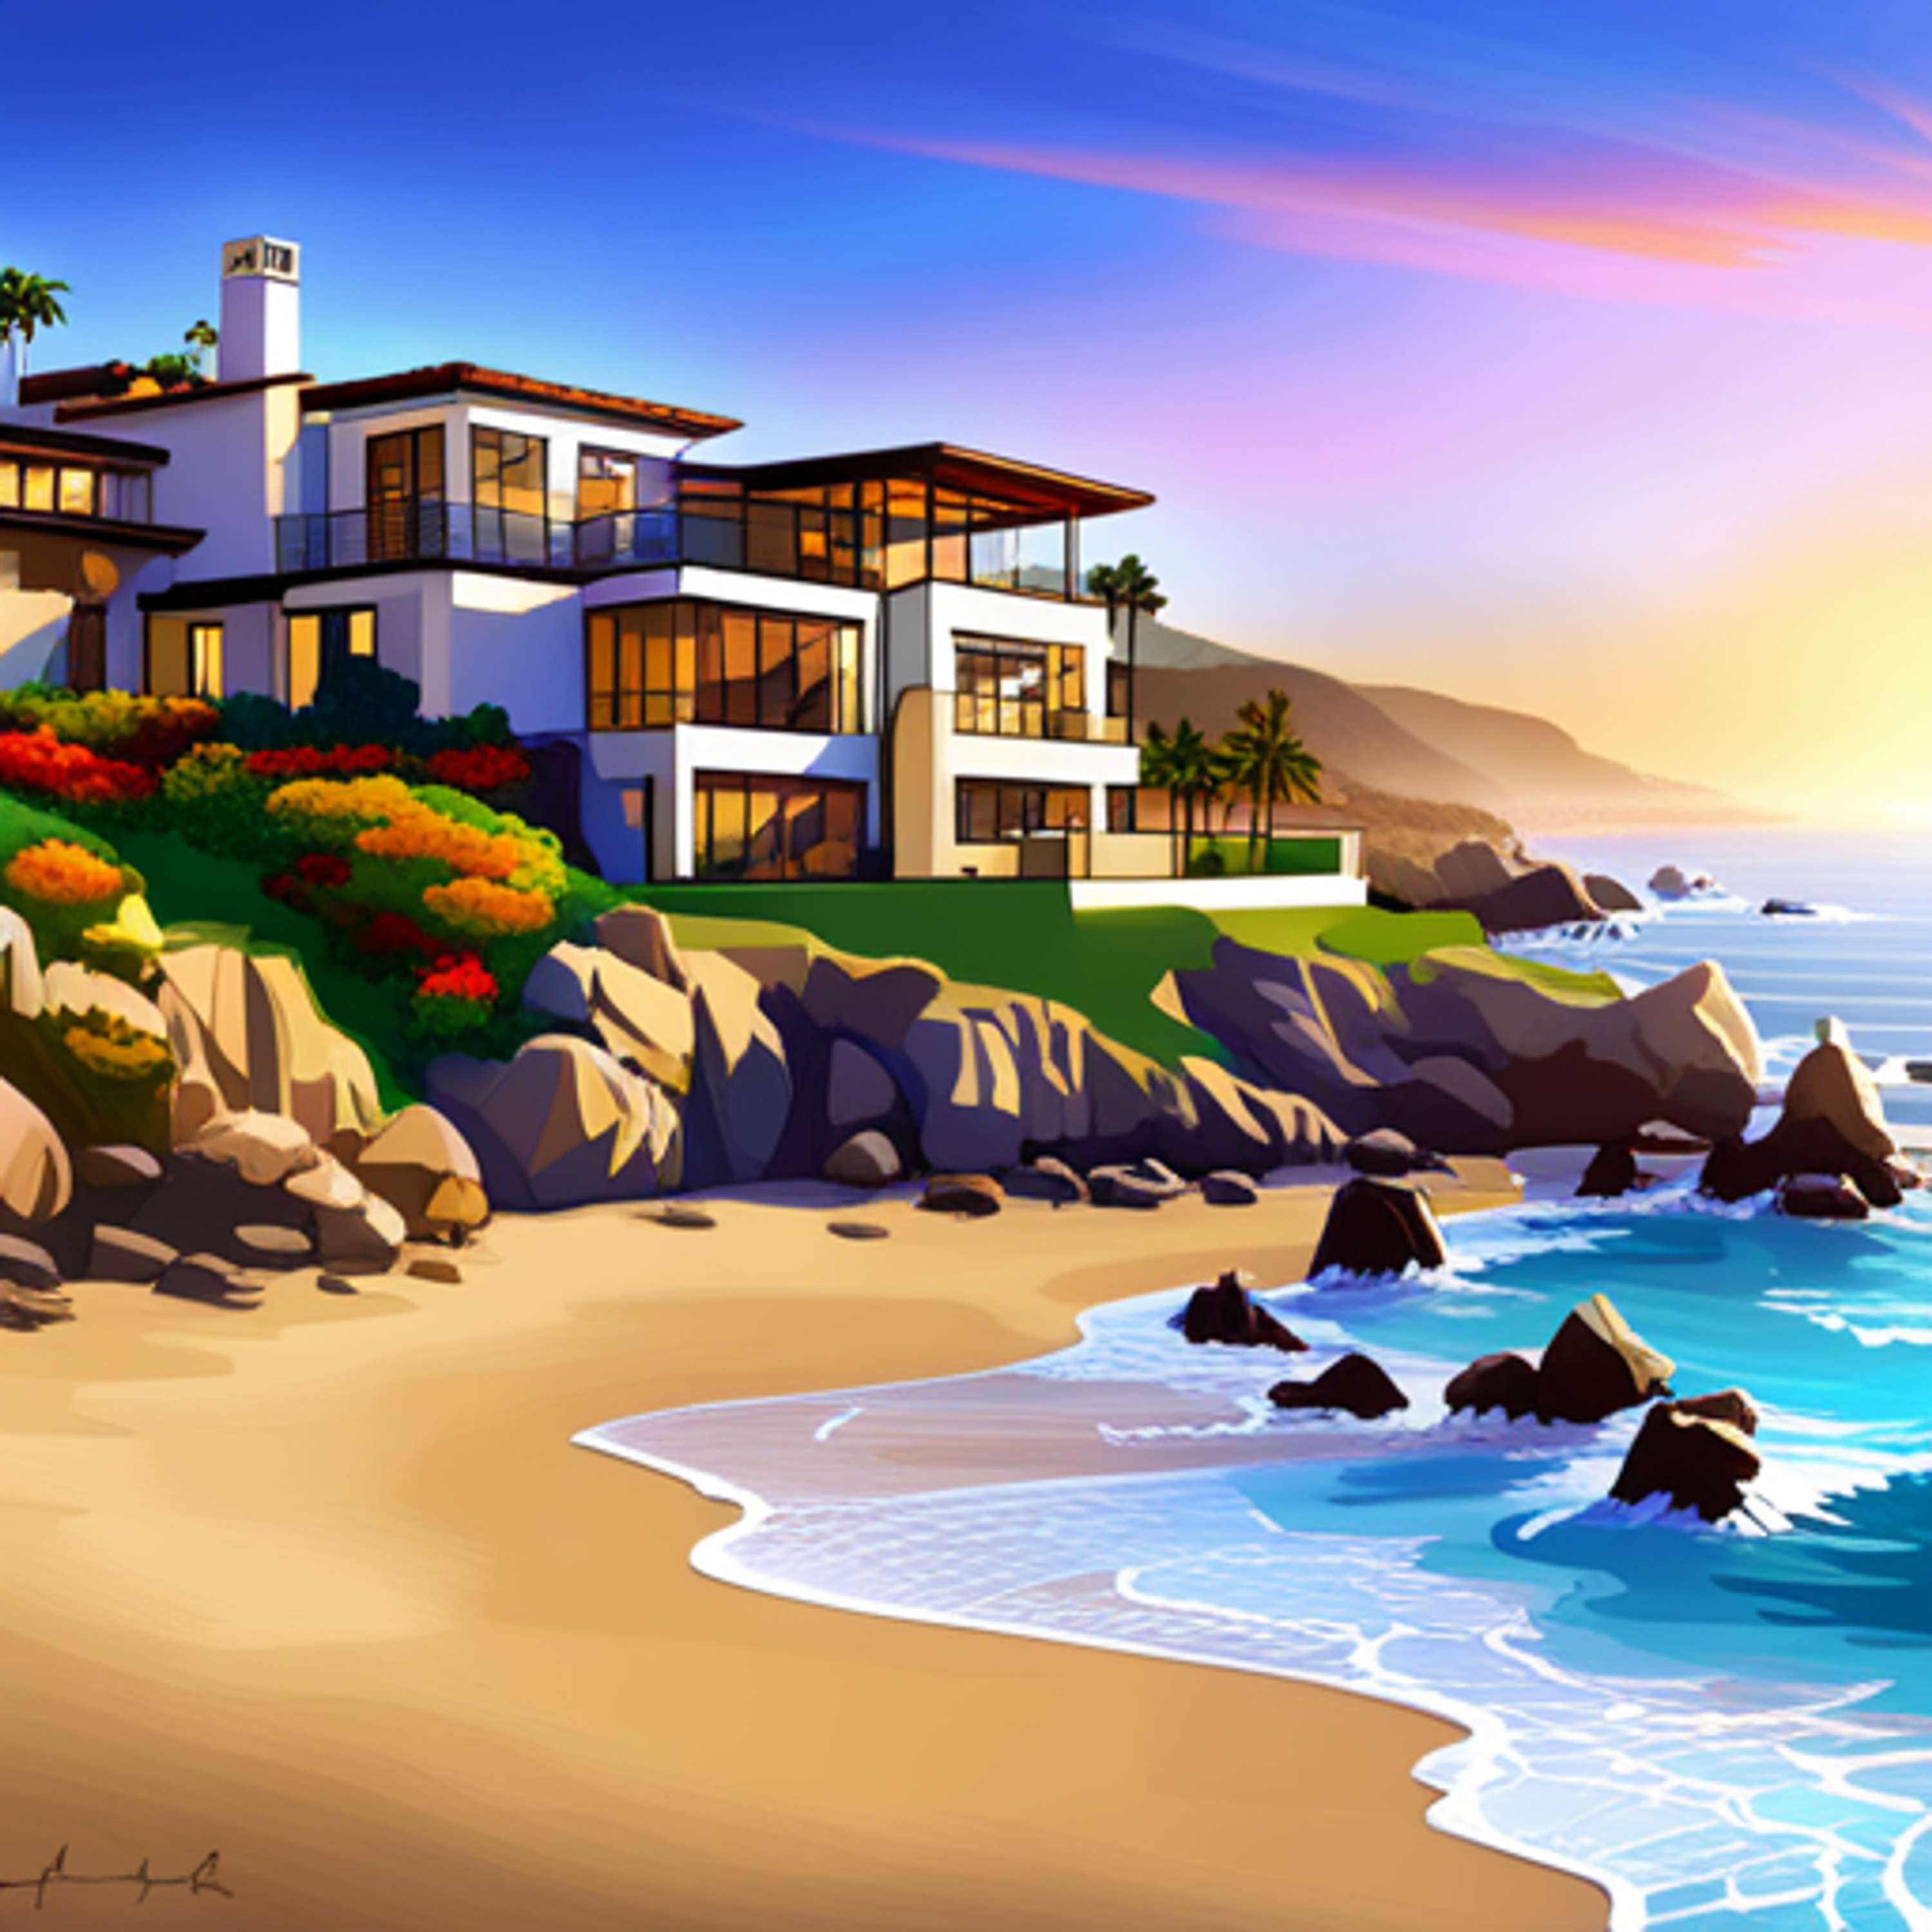 Malibu Mansions: Exclusive Luxury Homes